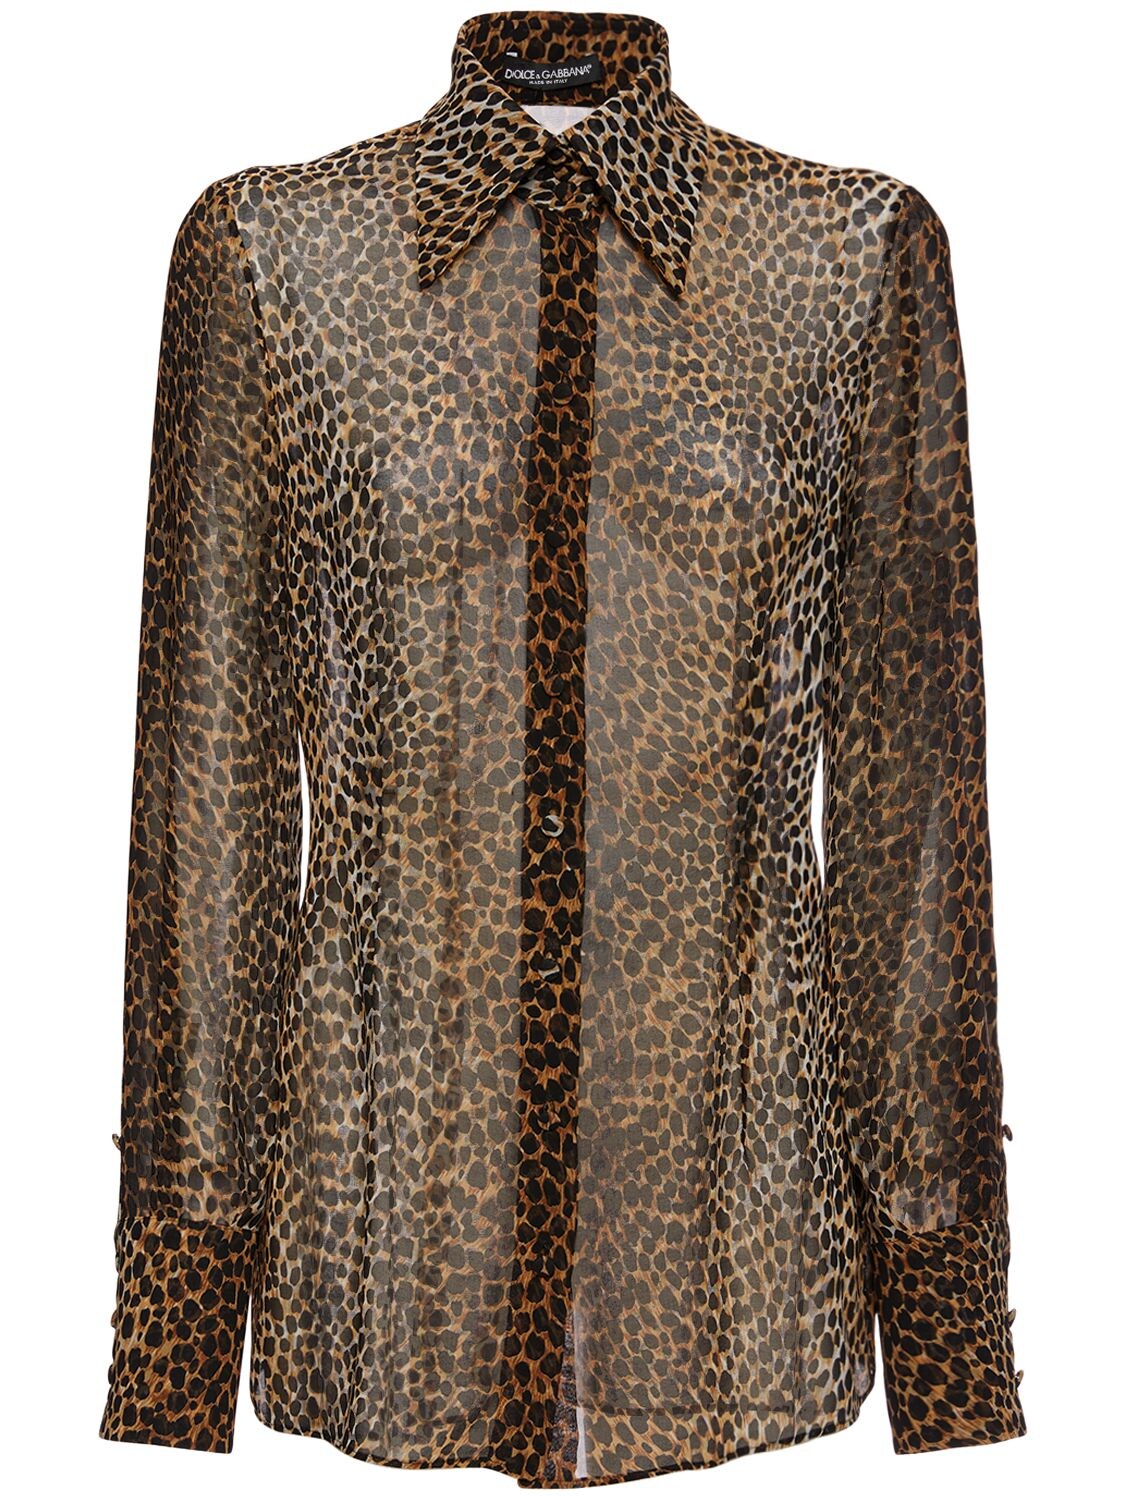 Leopard Print 100% Silk Blouse